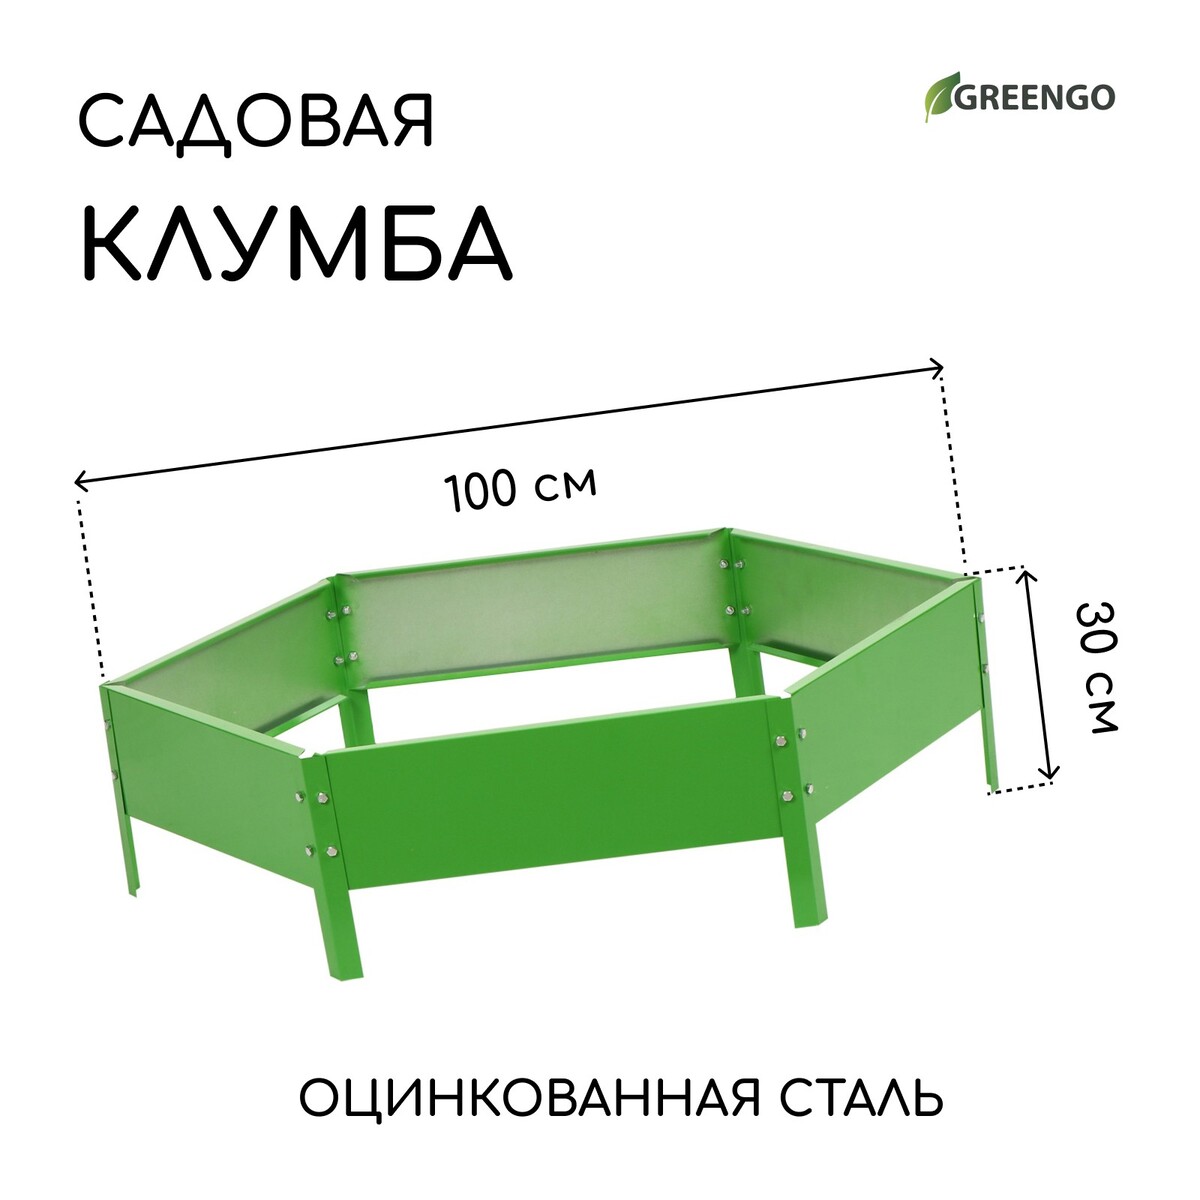 Клумба оцинкованная, d = 100 см, h = 15 см, ярко-зеленая, greengo клумба оцинкованная d 60 см h 15 см желтая greengo